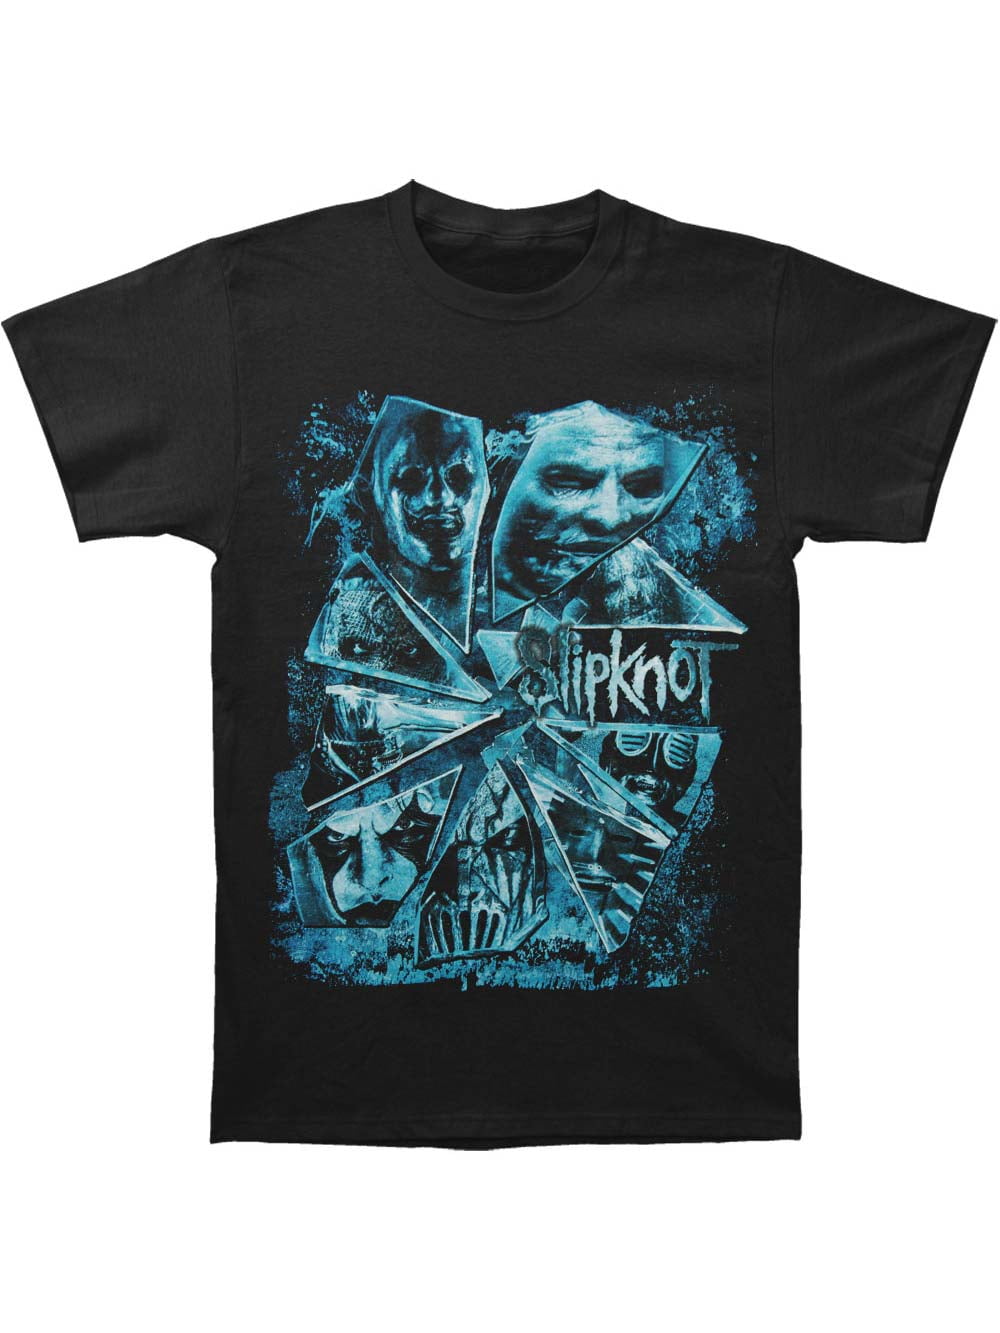 Slipknot Men's Broken Glass T-shirt Black - Walmart.com